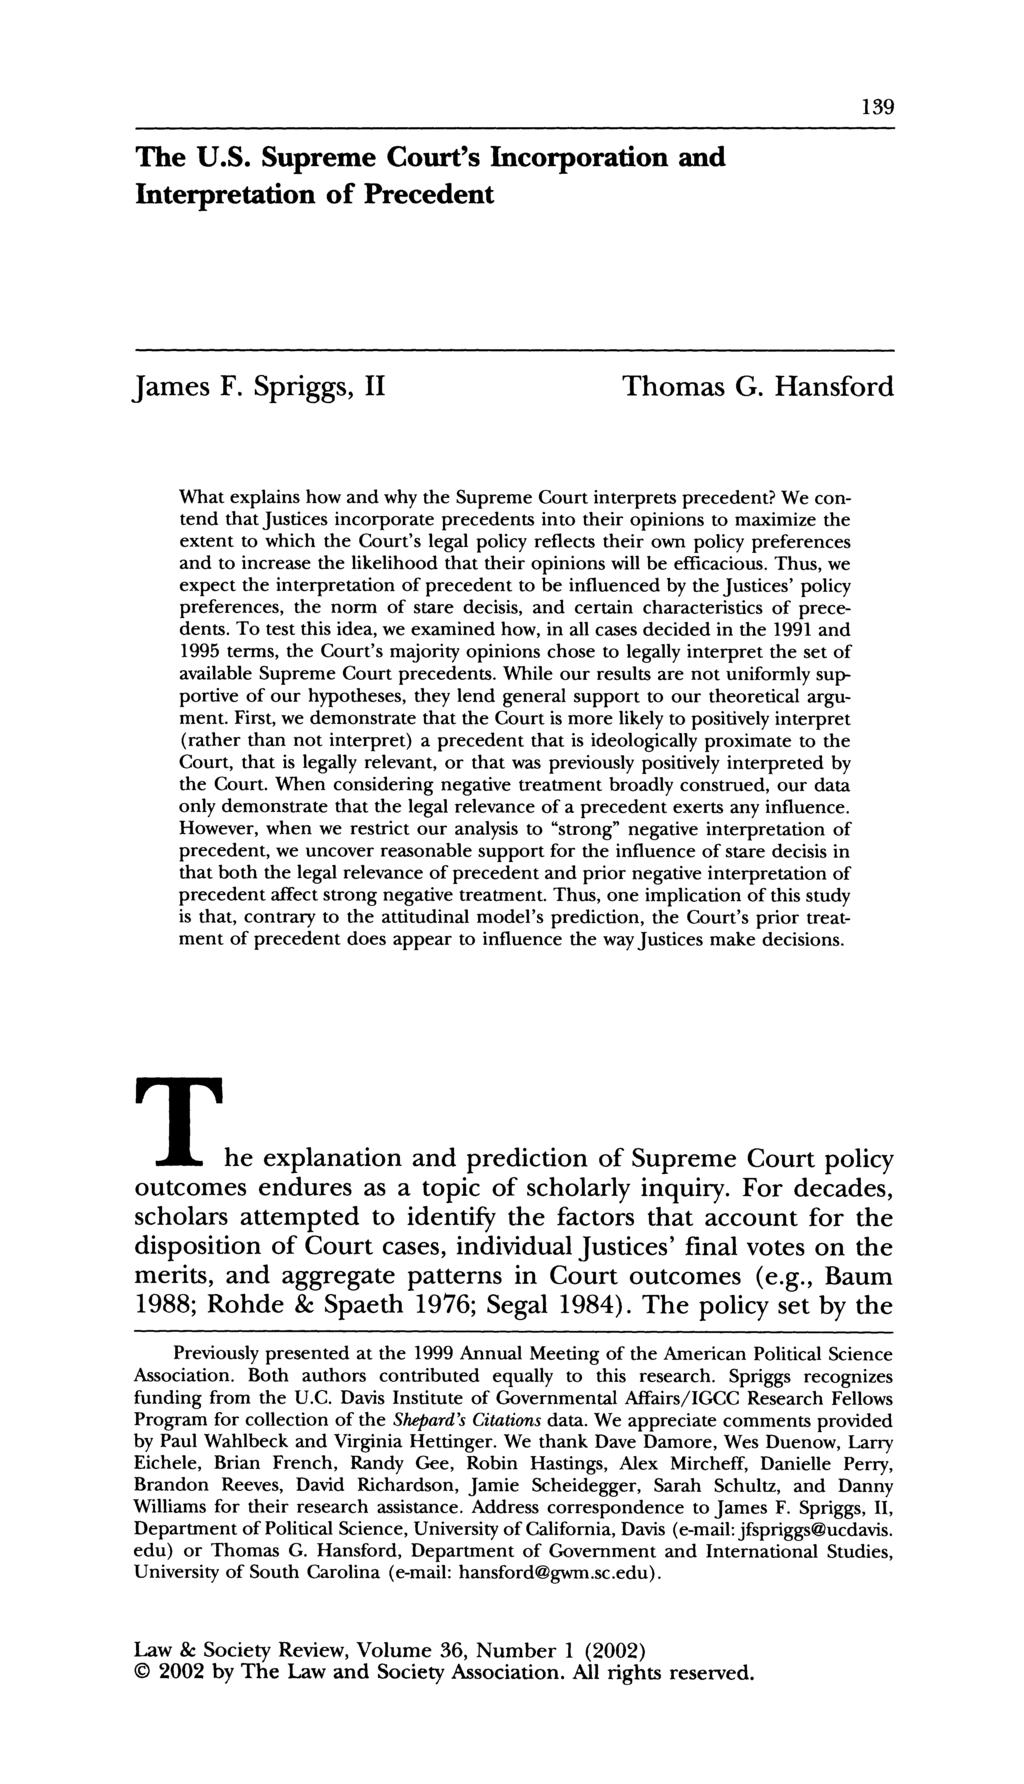 The U.S. Supreme Court's Incorporation and Interpretation of Precedent James F. Spriggs, I1 Thomas G. Hansford What explains how and why the Supreme Court interprets precedent?